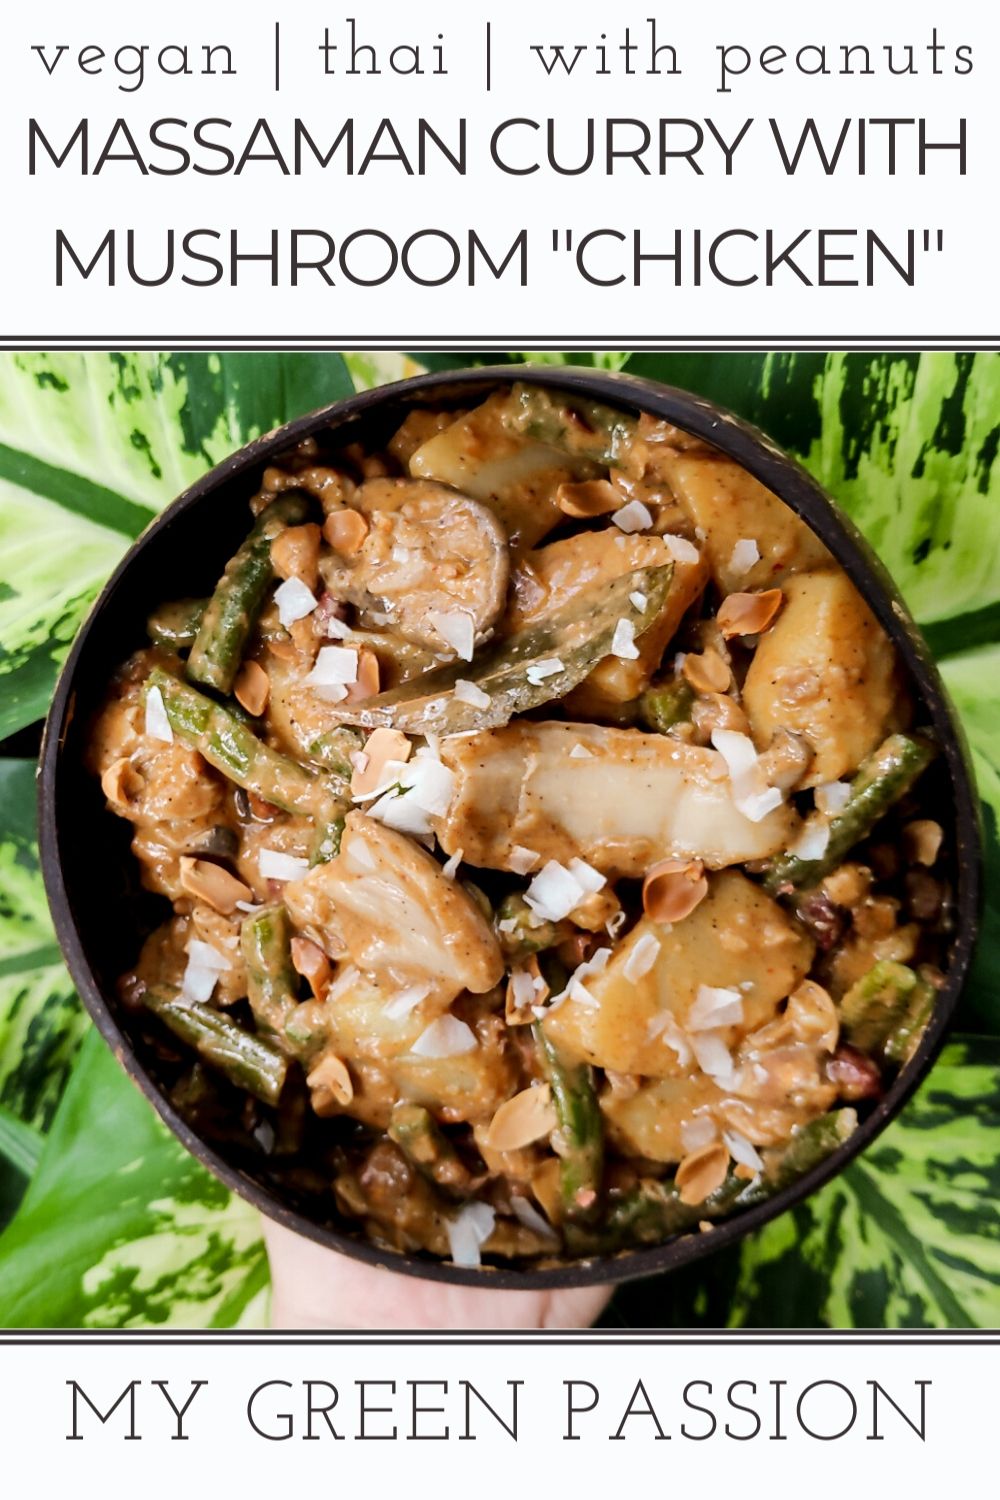 vegan massaman curry with mushroom ch icken plant-based thai with peanuts gluten-free